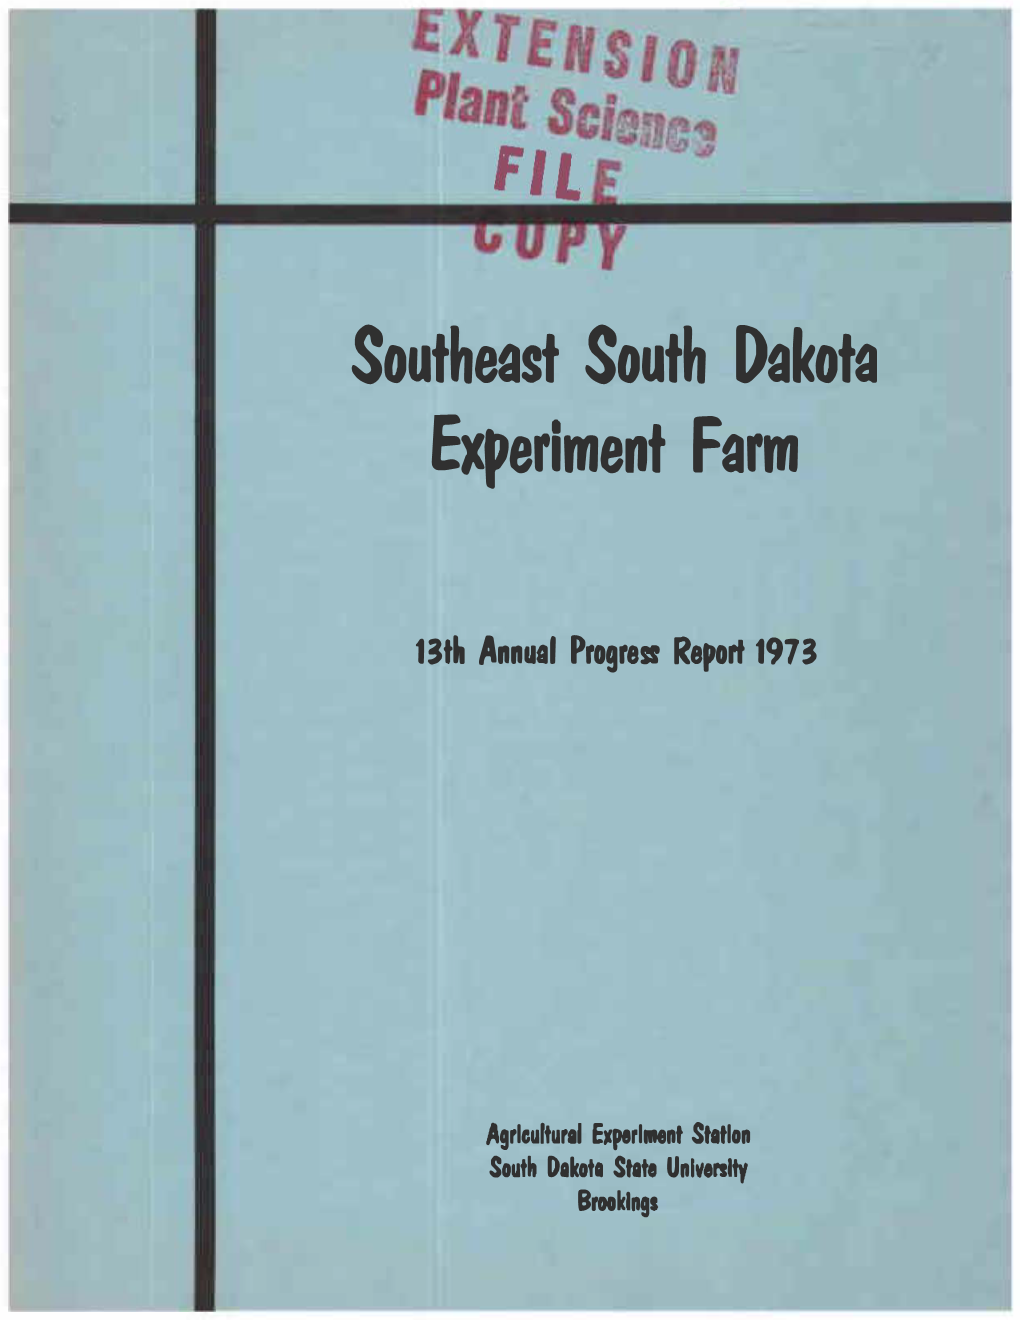 Southeast South Dakota Experiment Farm Annual Progress Report, 1973